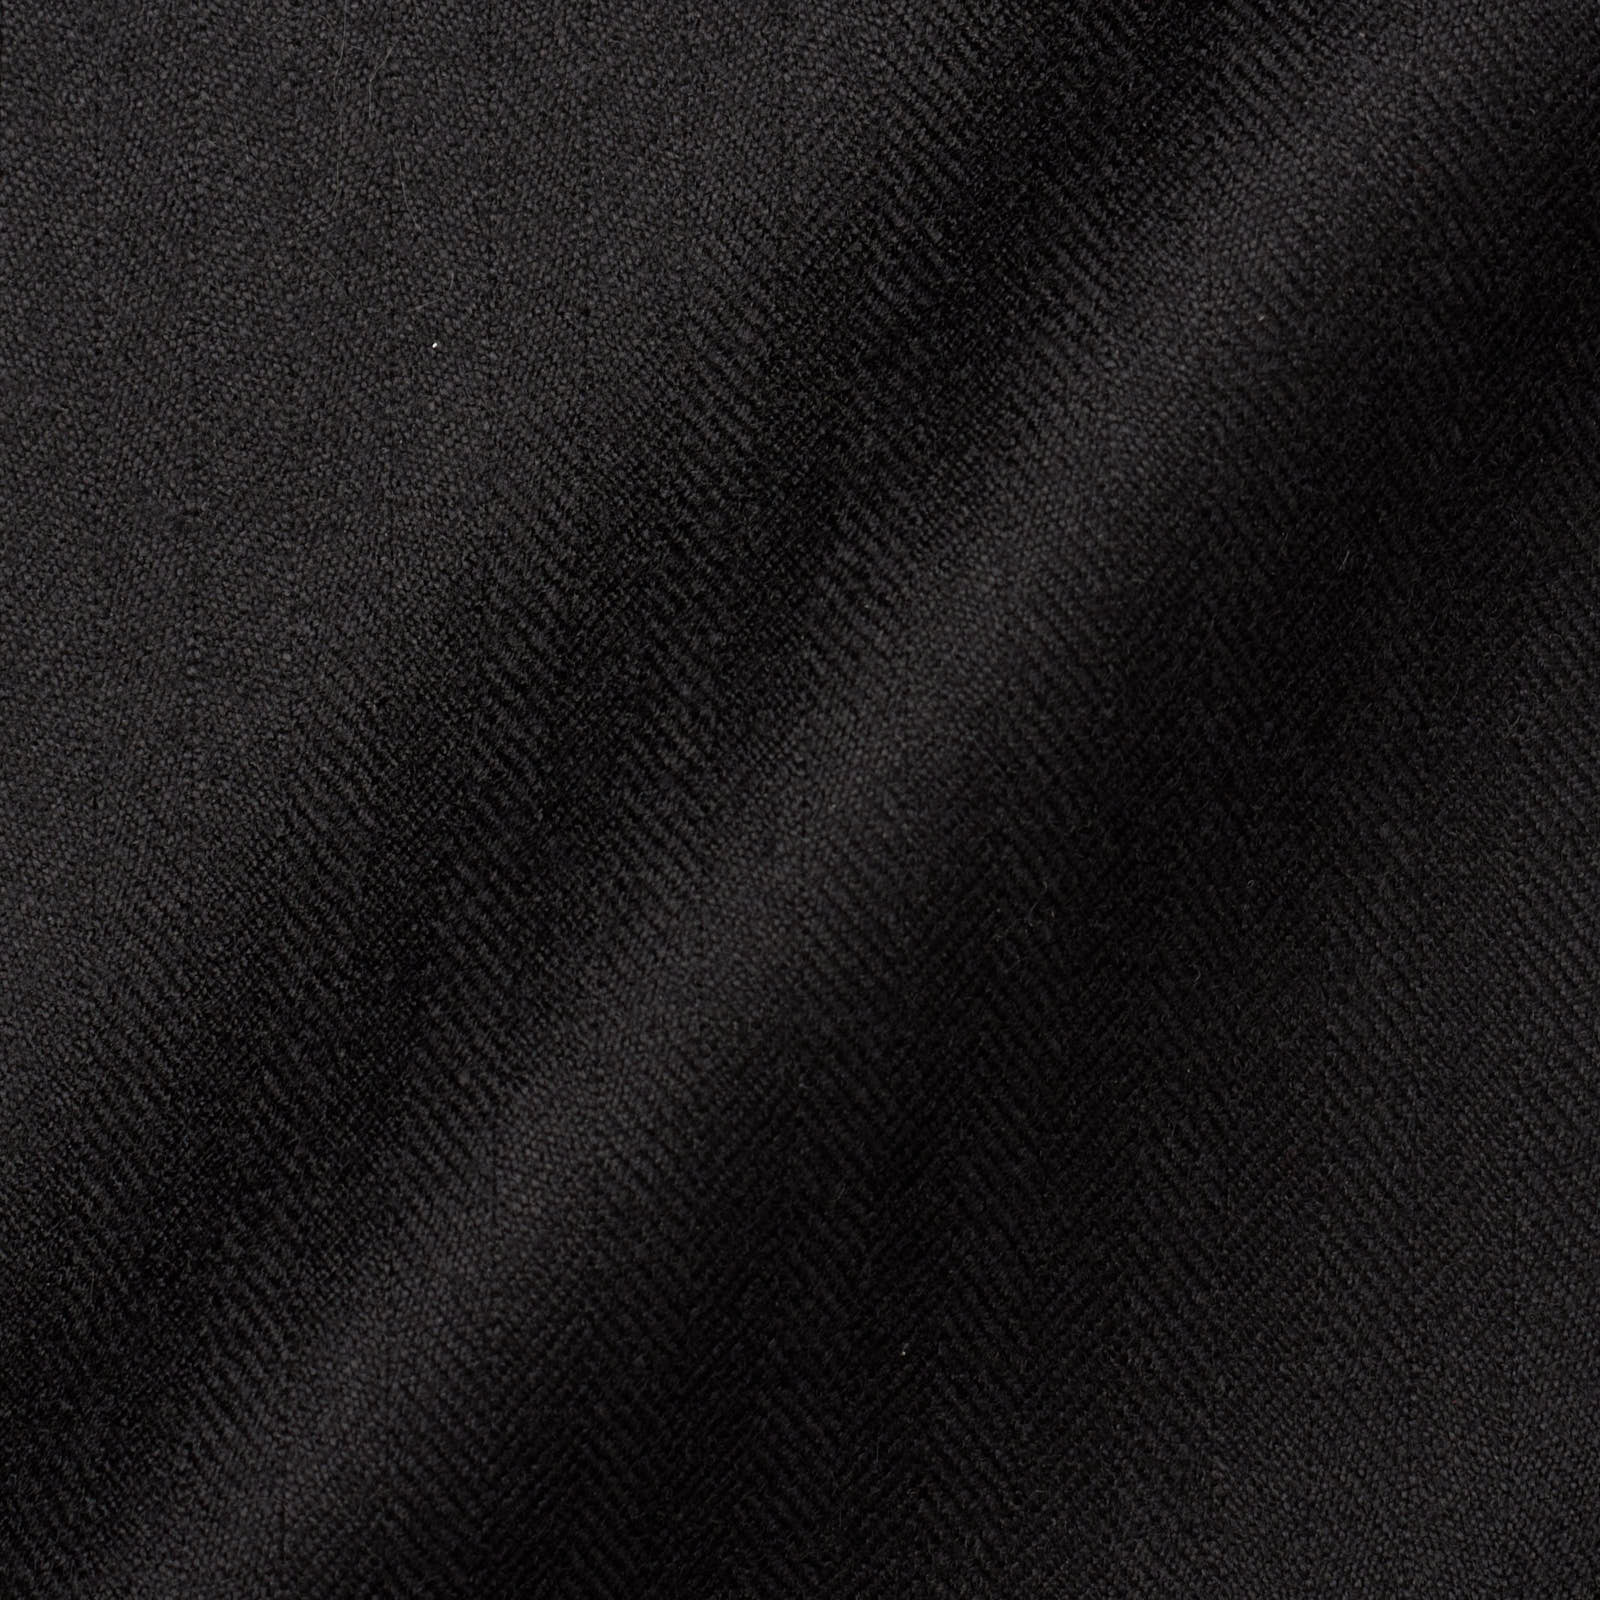 VANUCCI Milano Handmade Black Cashmere-Silk Blazer Jacket EU 50 NEW US 40